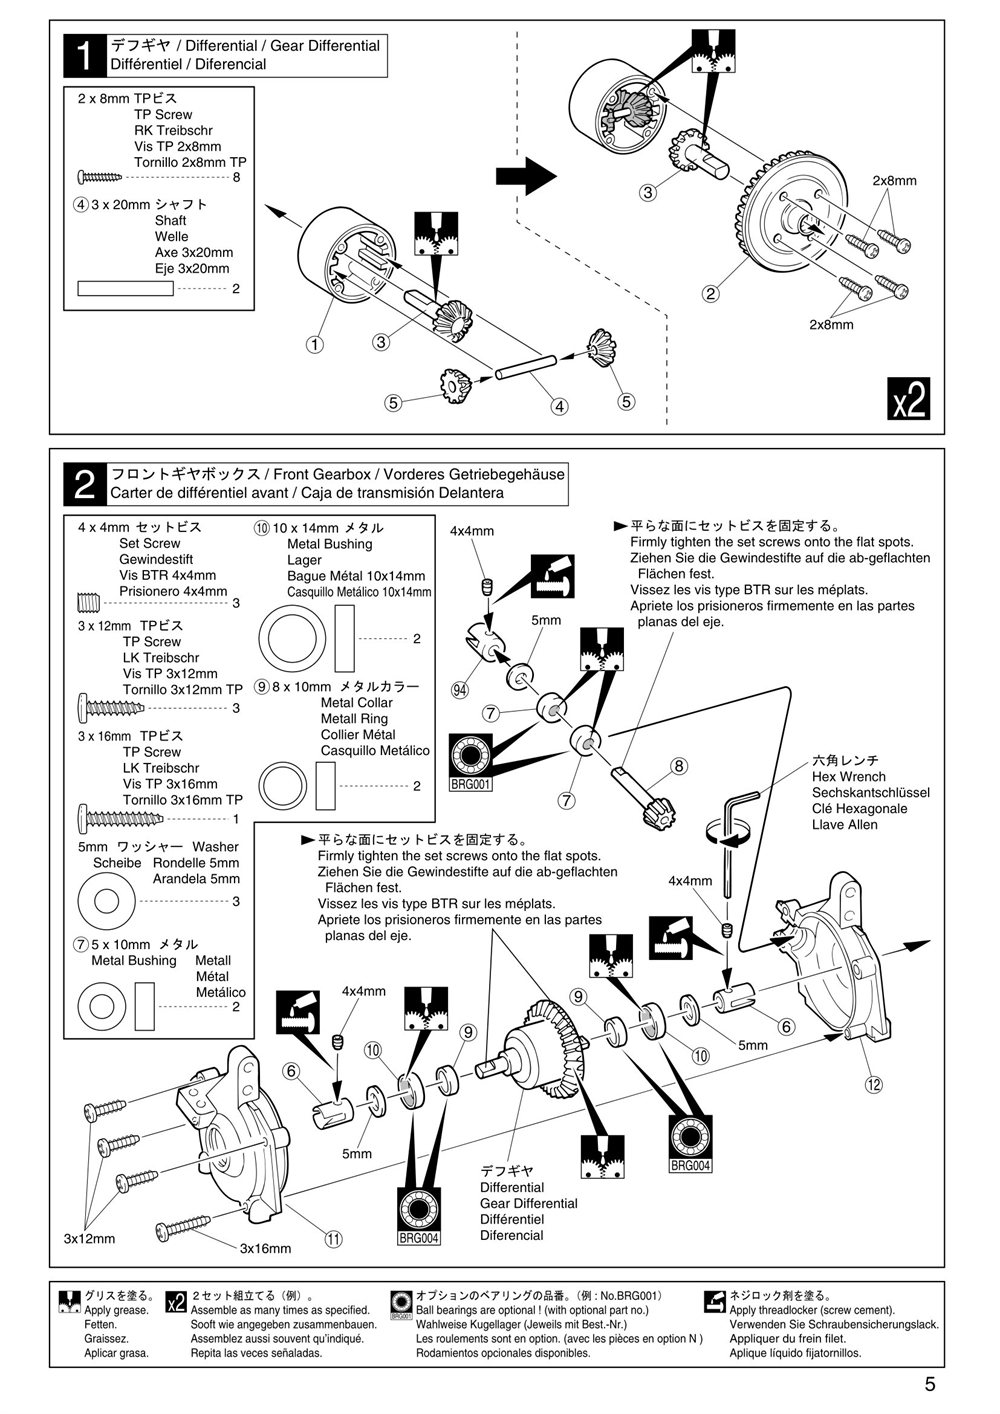 Kyosho - PureTen GP Alpha 3 - Manual - Page 5